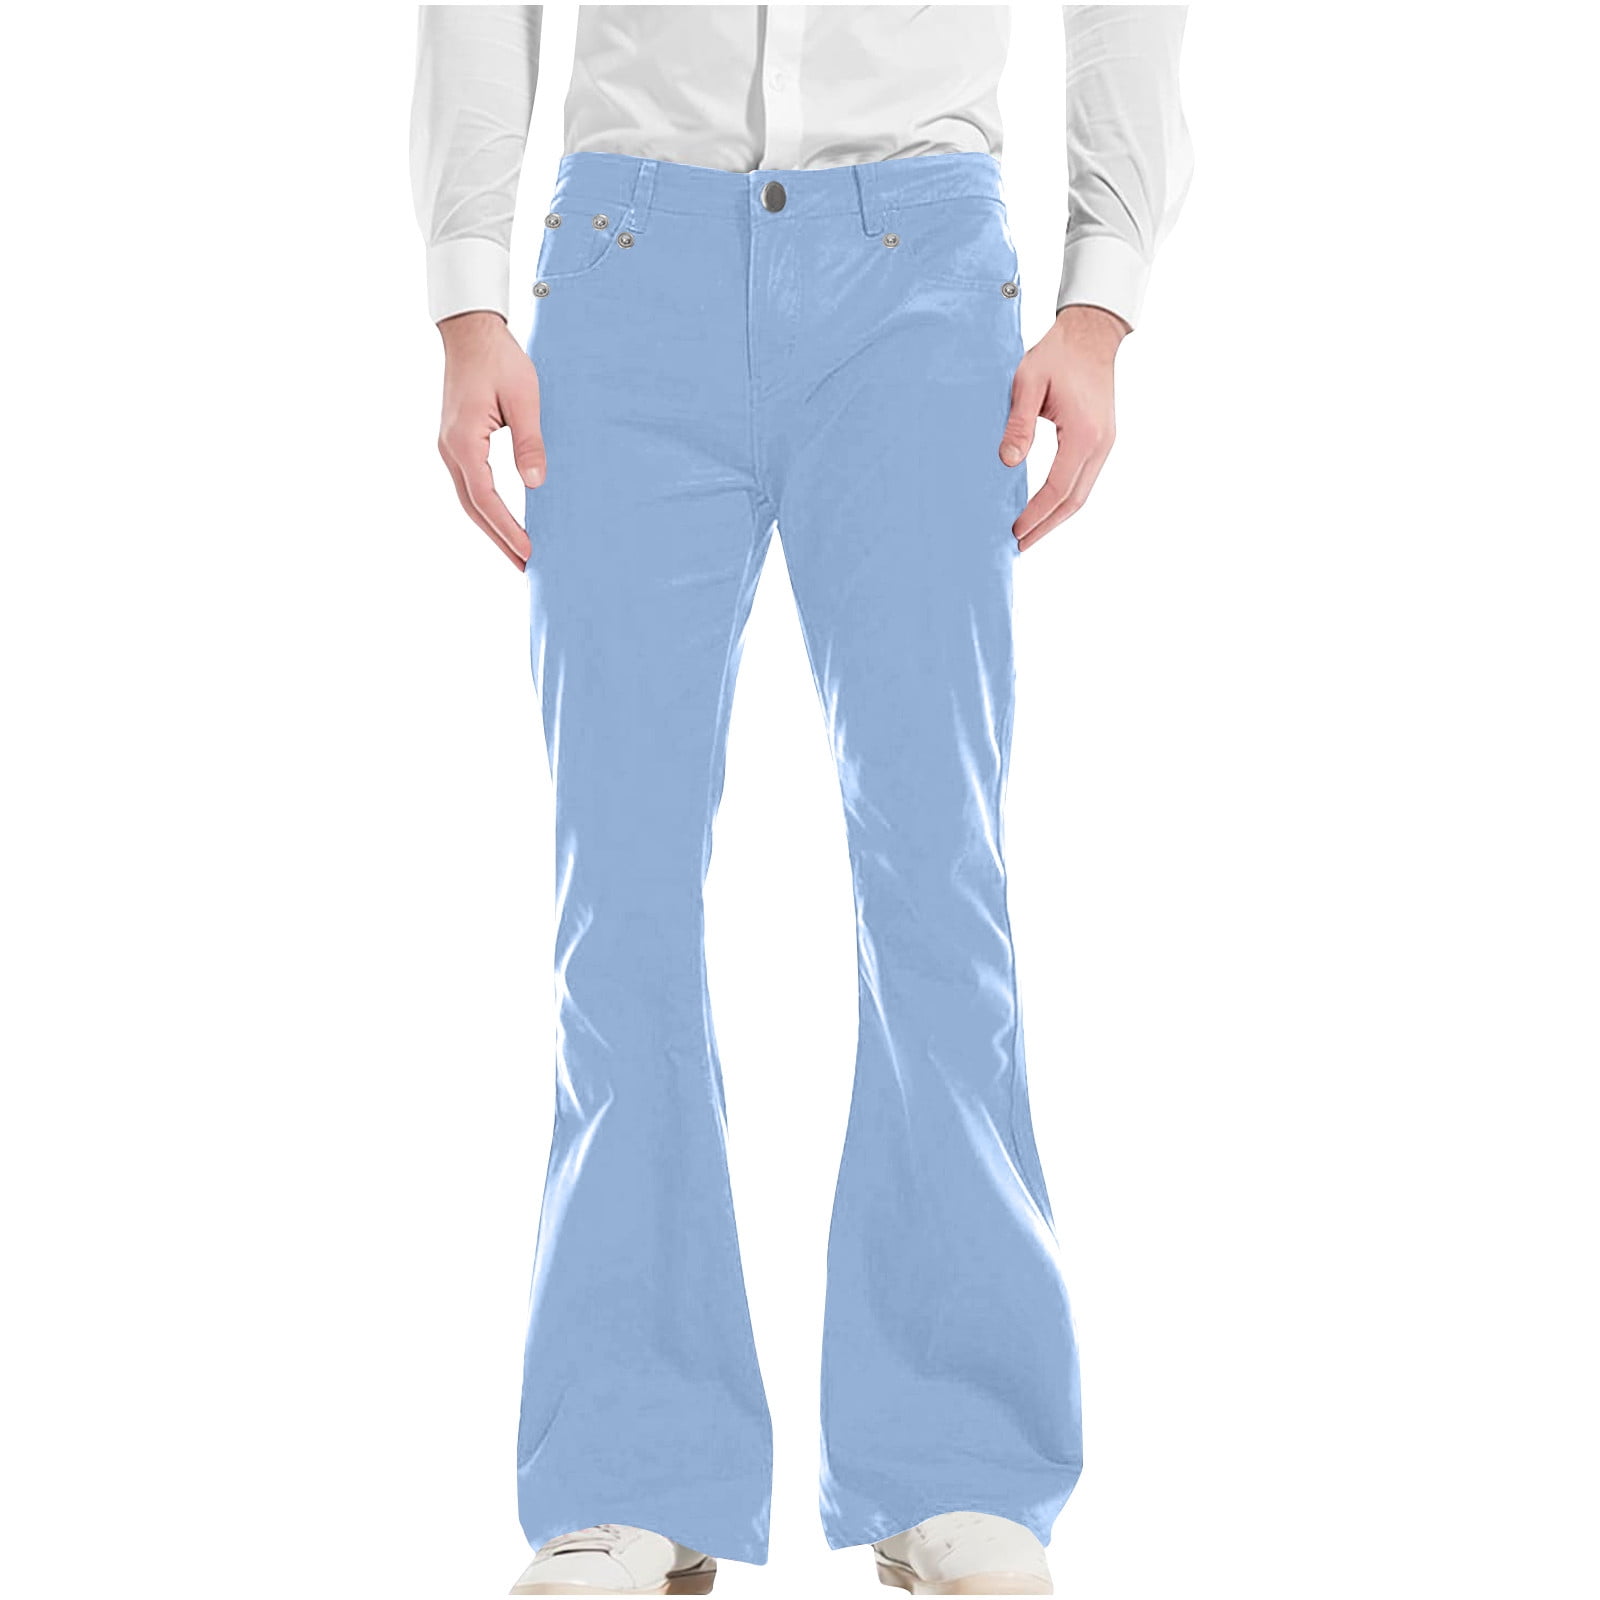 Jyeity Fall Savings Men Casual Pockets Zipper Button Vintage Bell-bottoms  Trousers Pants Gallery Dept Sweatpants Blue Size L